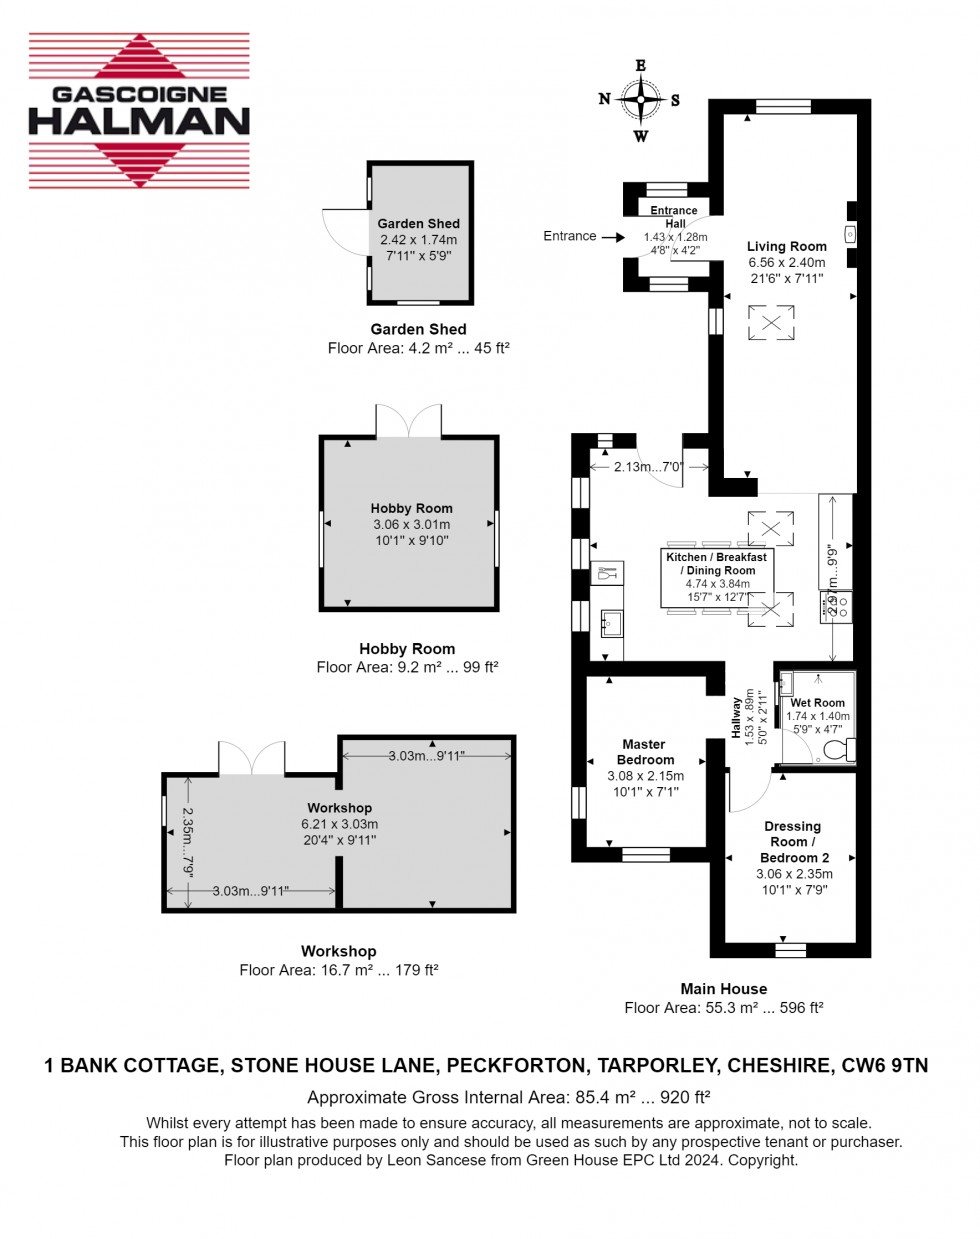 Floorplan for Bank Cottage, Stone House Lane, Peckforton, Tarporley